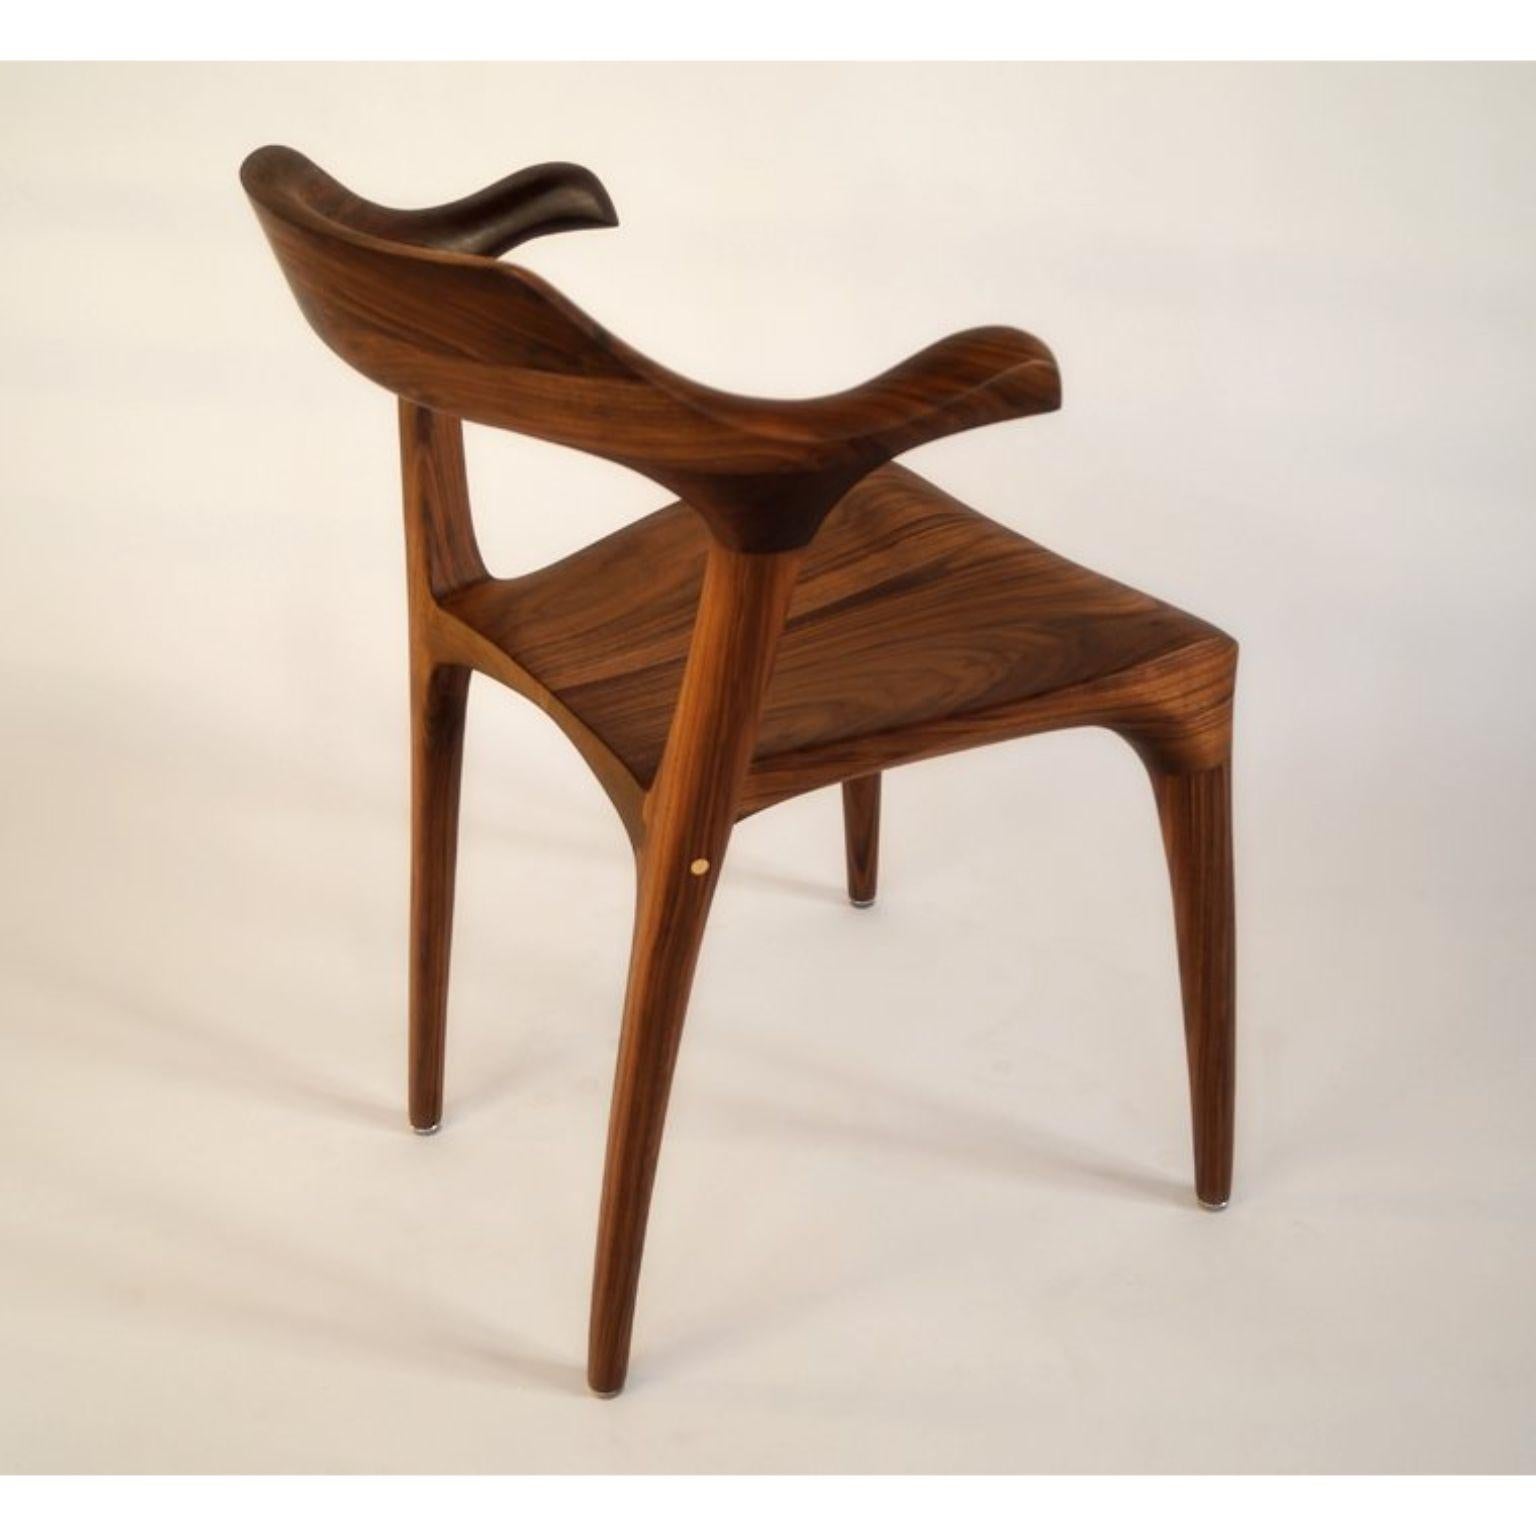 Danish Flamingo Beak Dining Room Chair Handcrafted and Designed by Morten Stenbaek